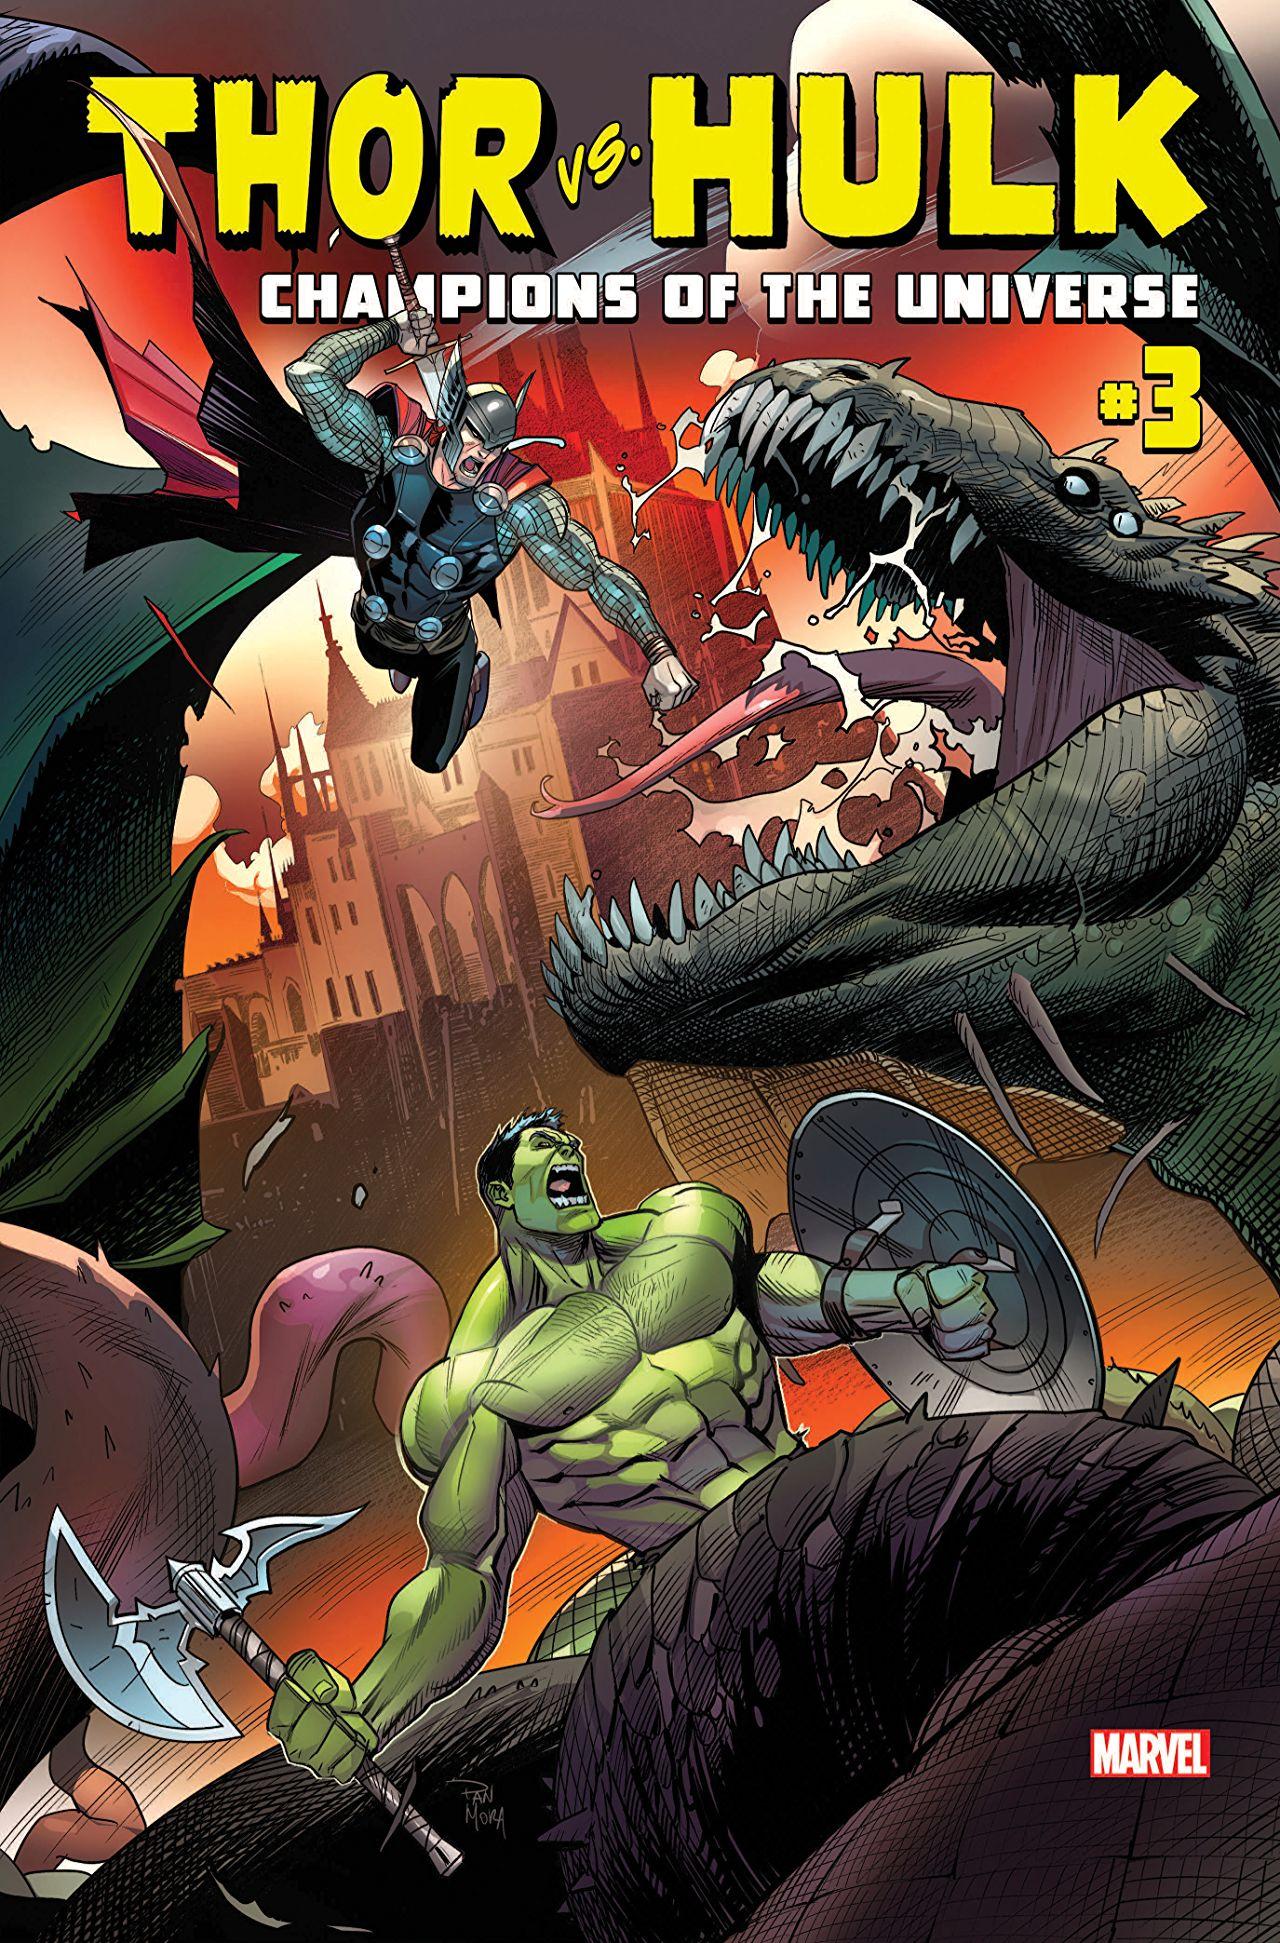 Thor vs. Hulk: Champions of the Universe Vol. 1 #3